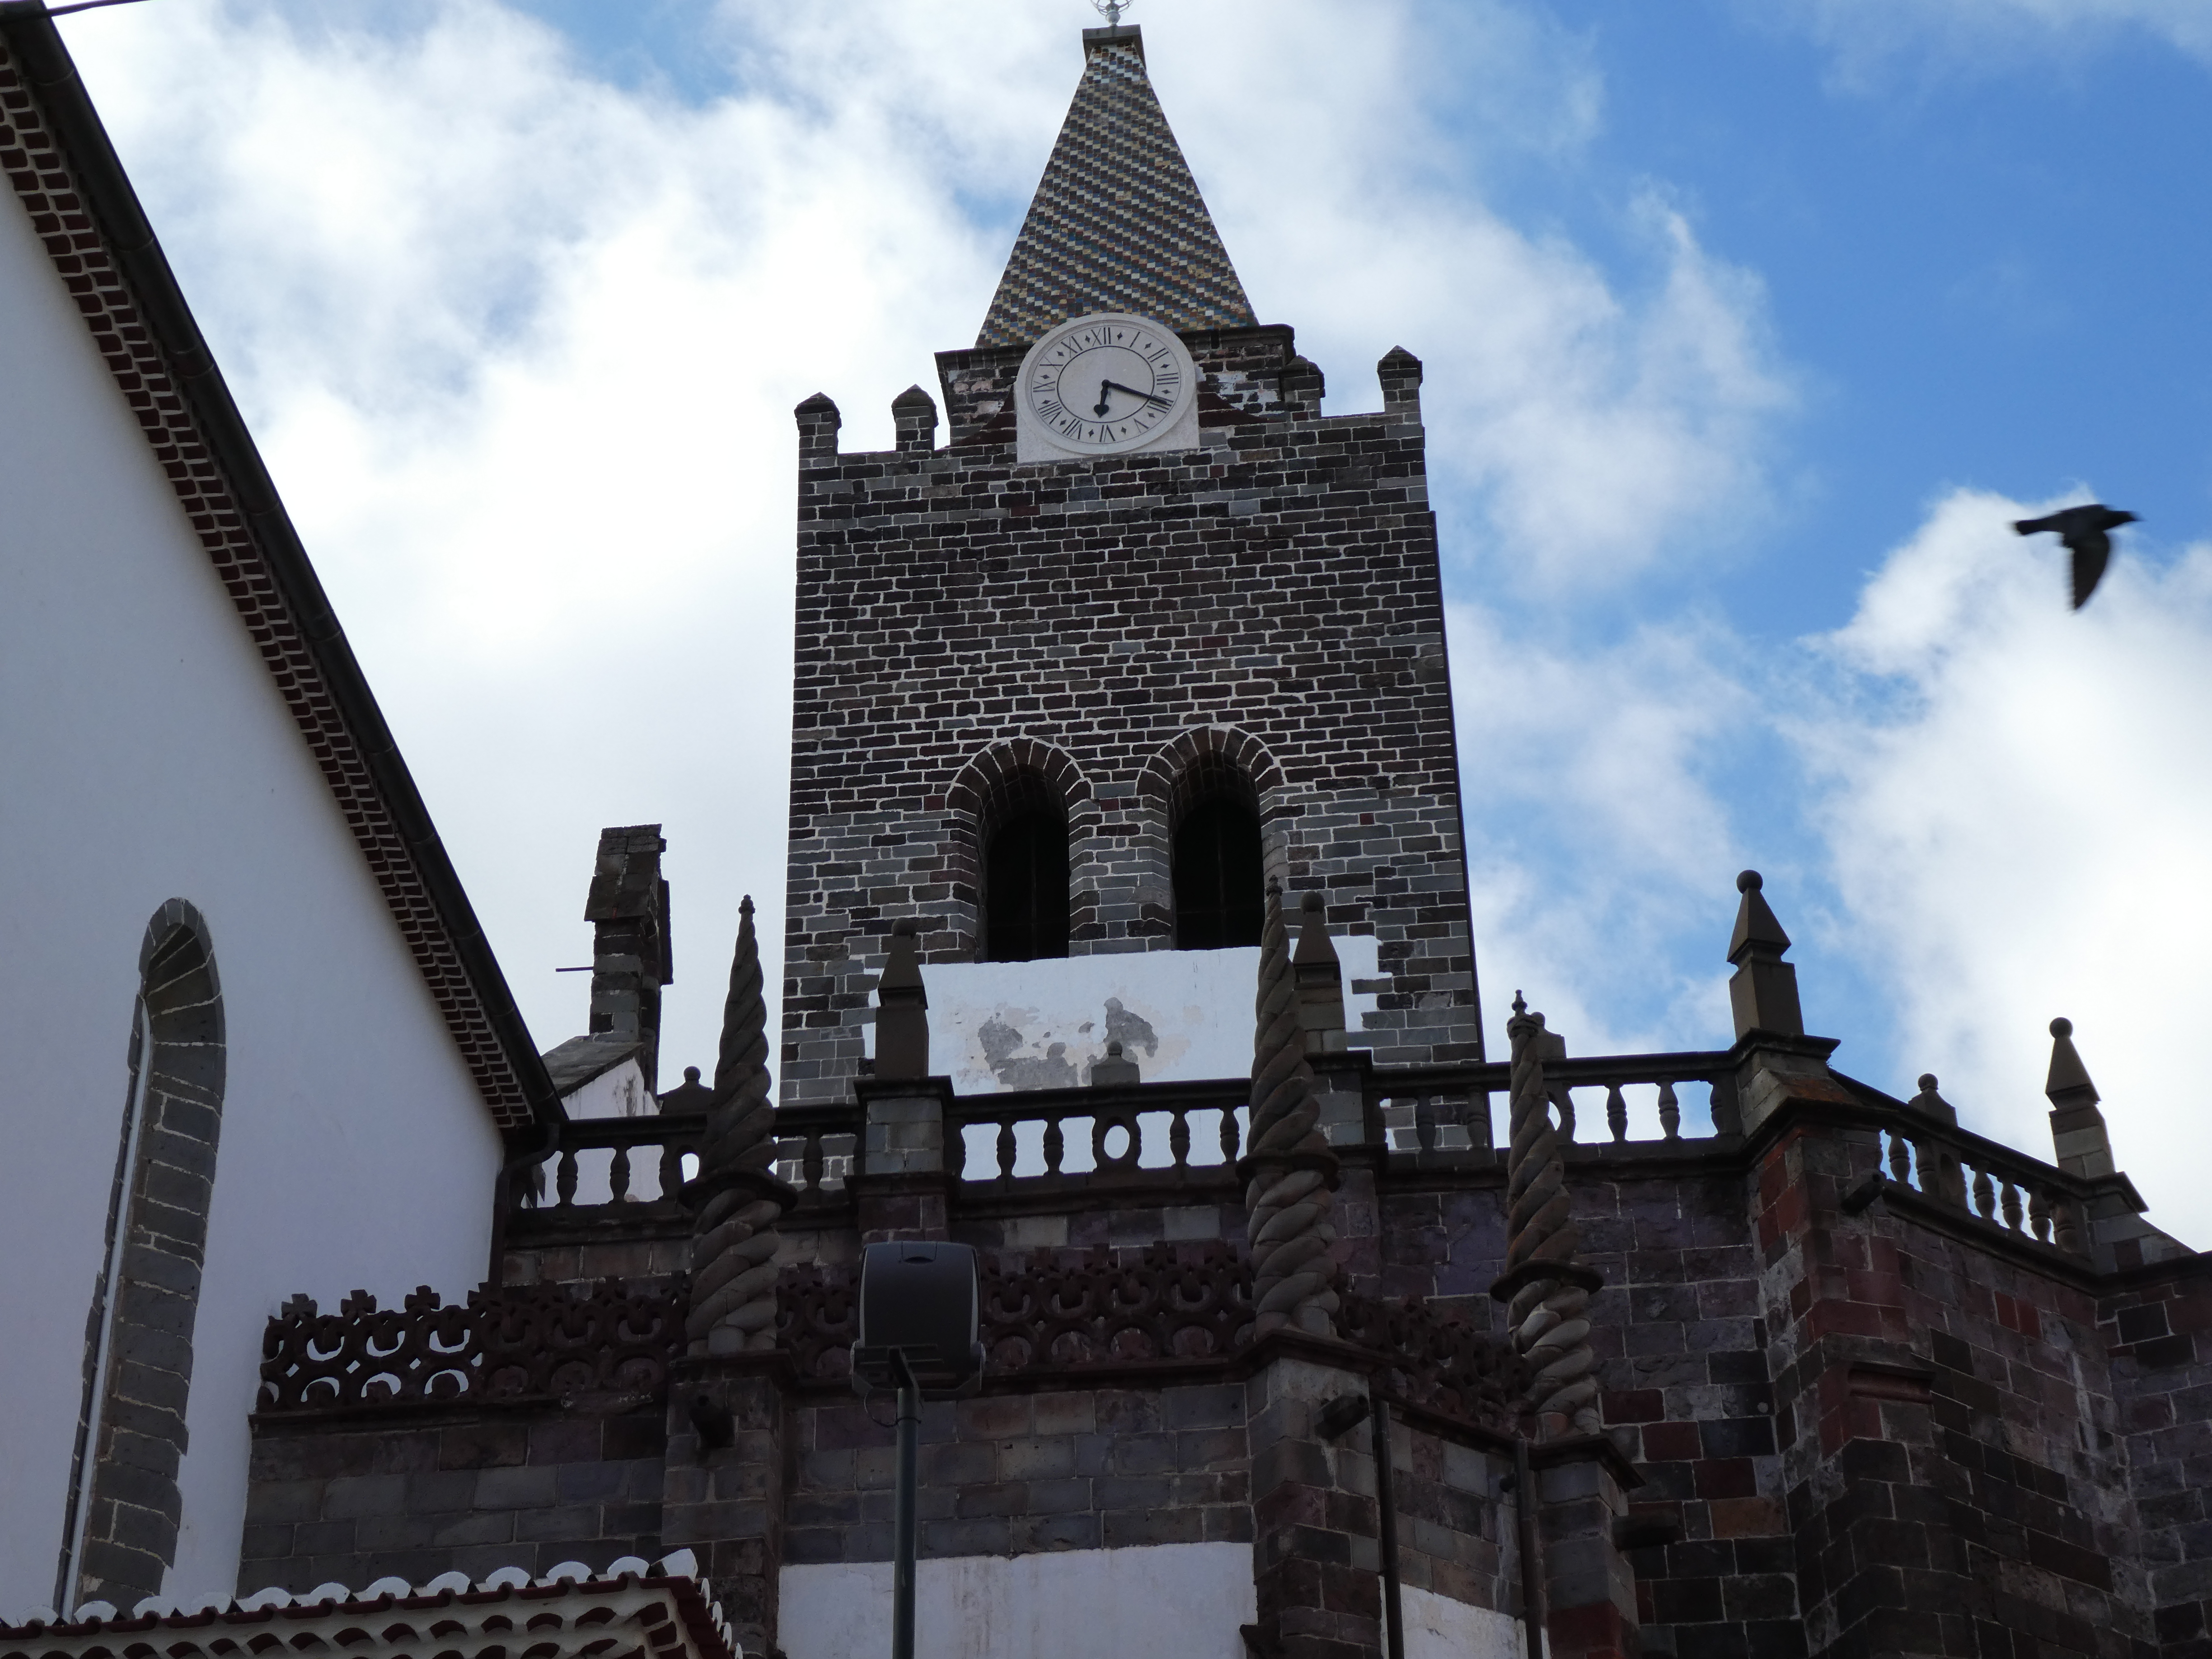 Sé Catedral de Nossa Senhora da Assunção Funchal - back gedrehte Türmchen